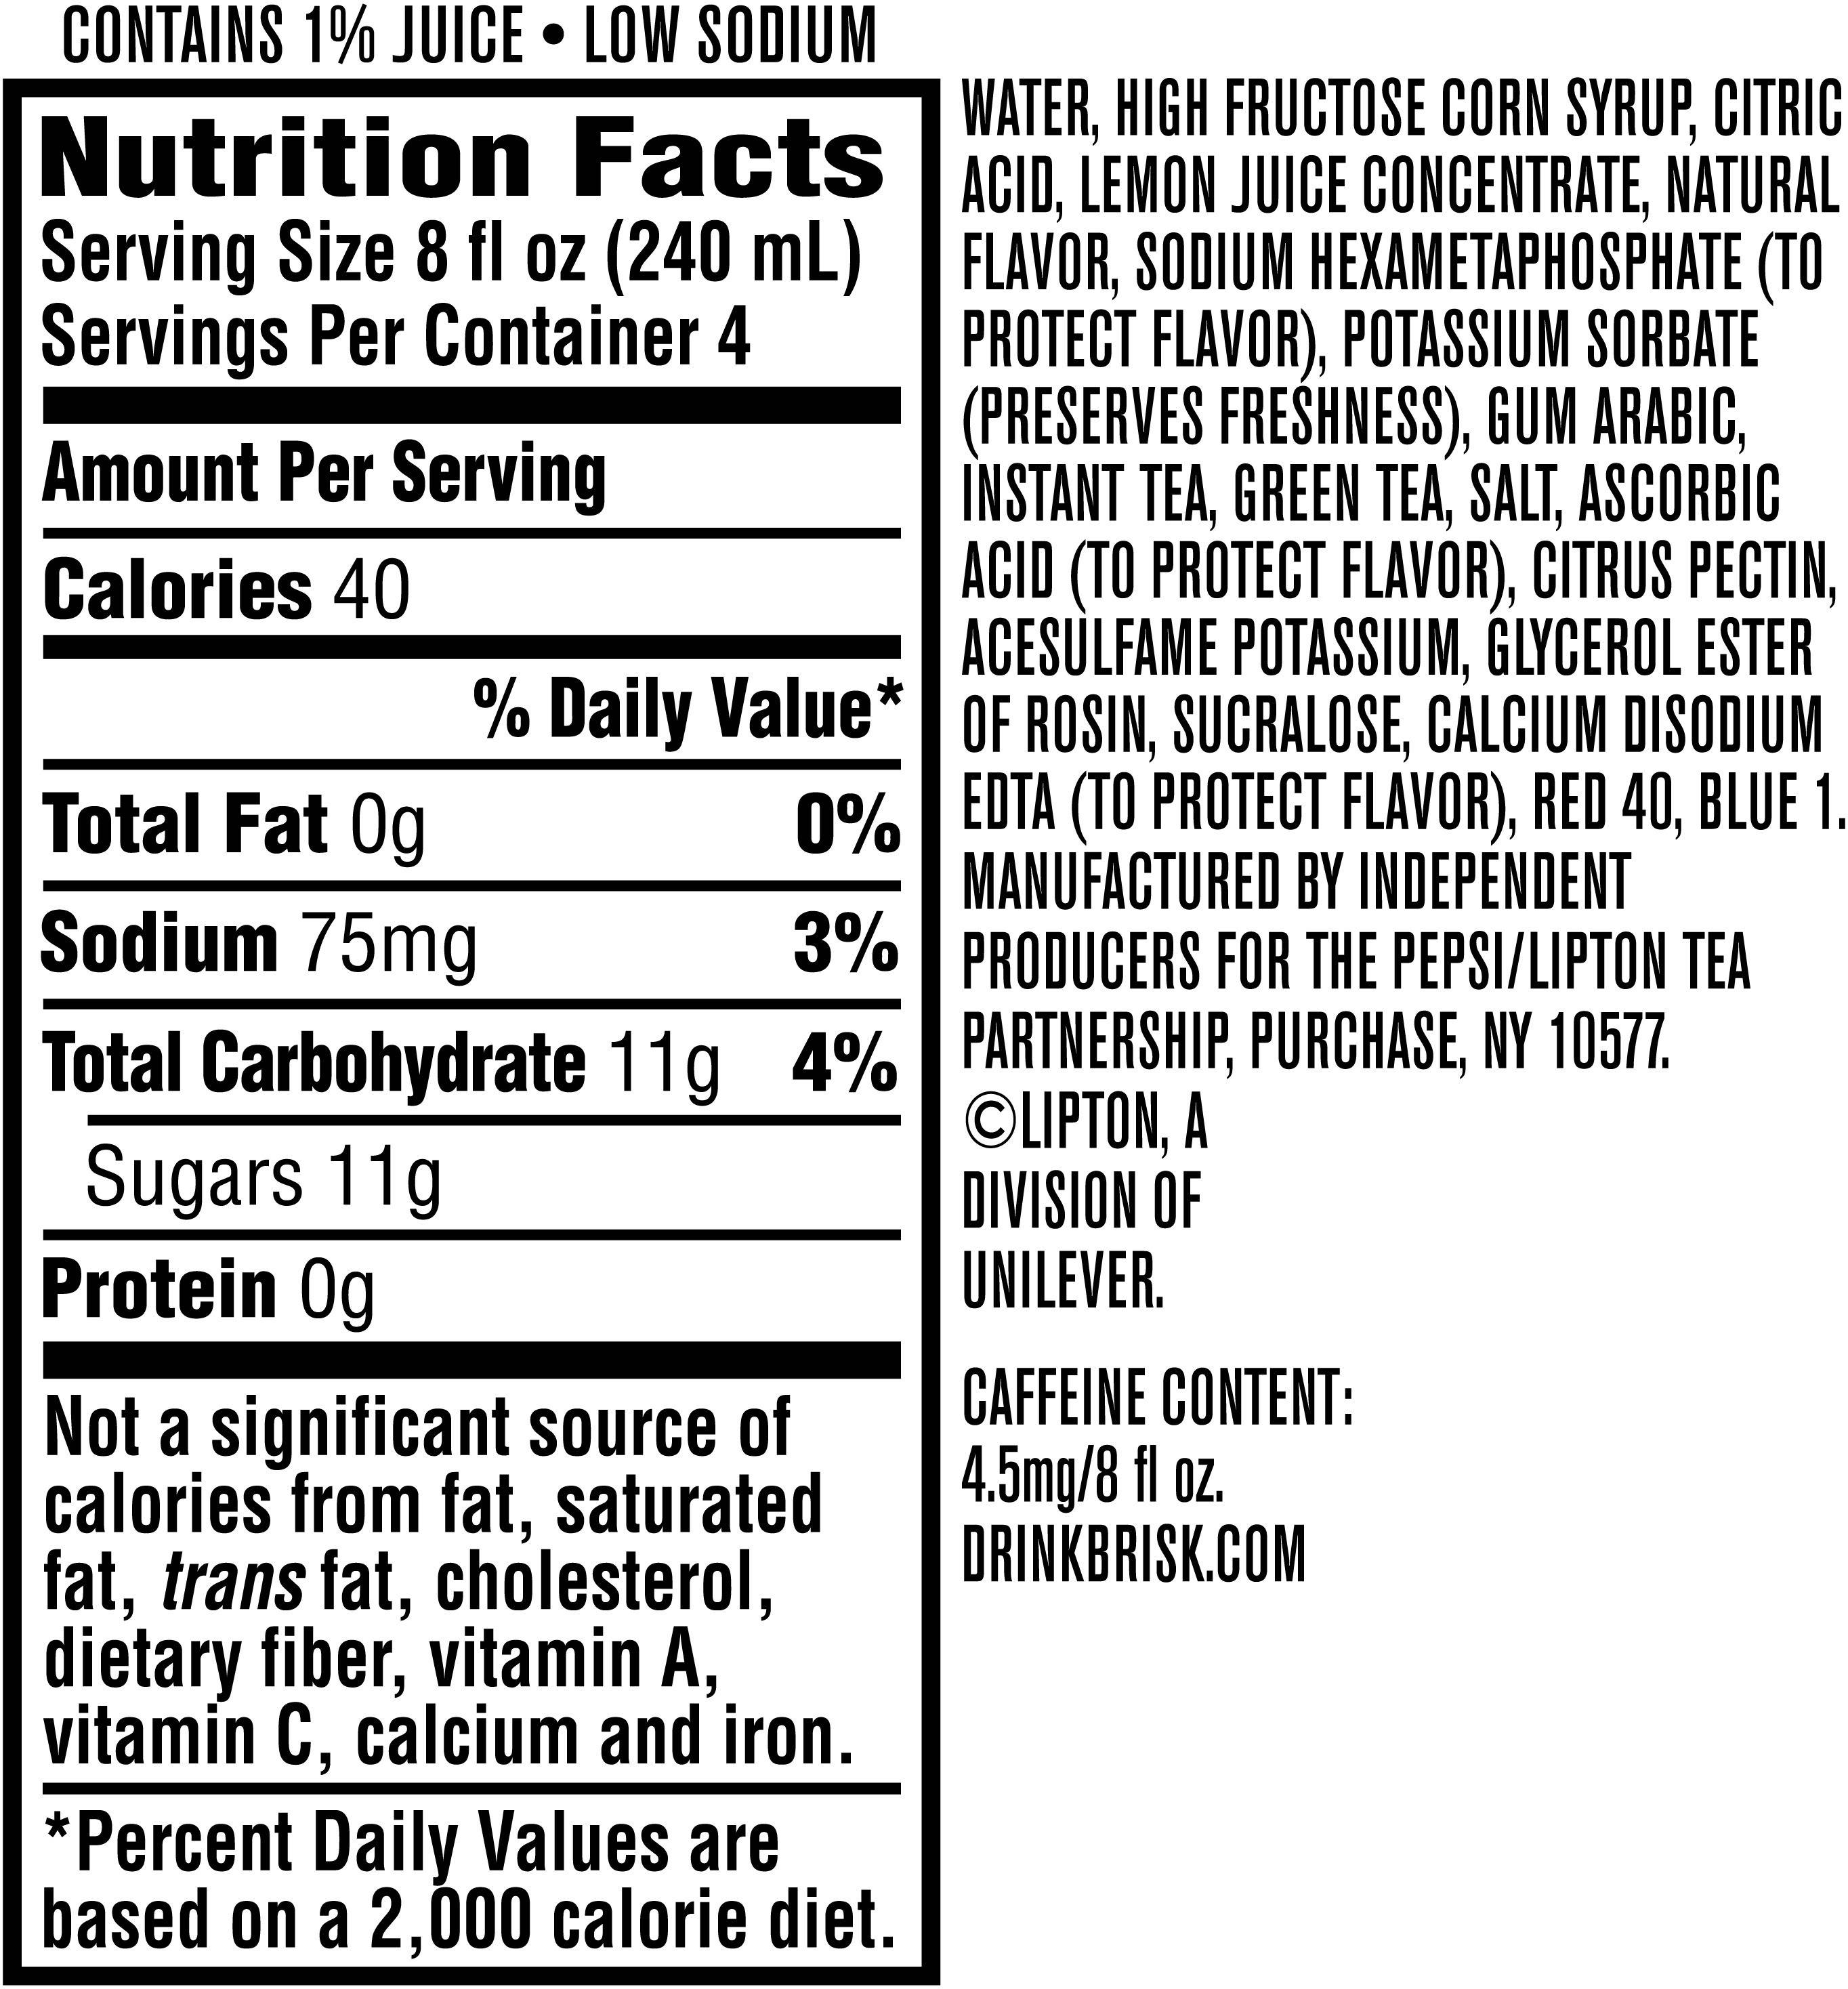 Image describing nutrition information for product Brisk Tea Cherry Limeade